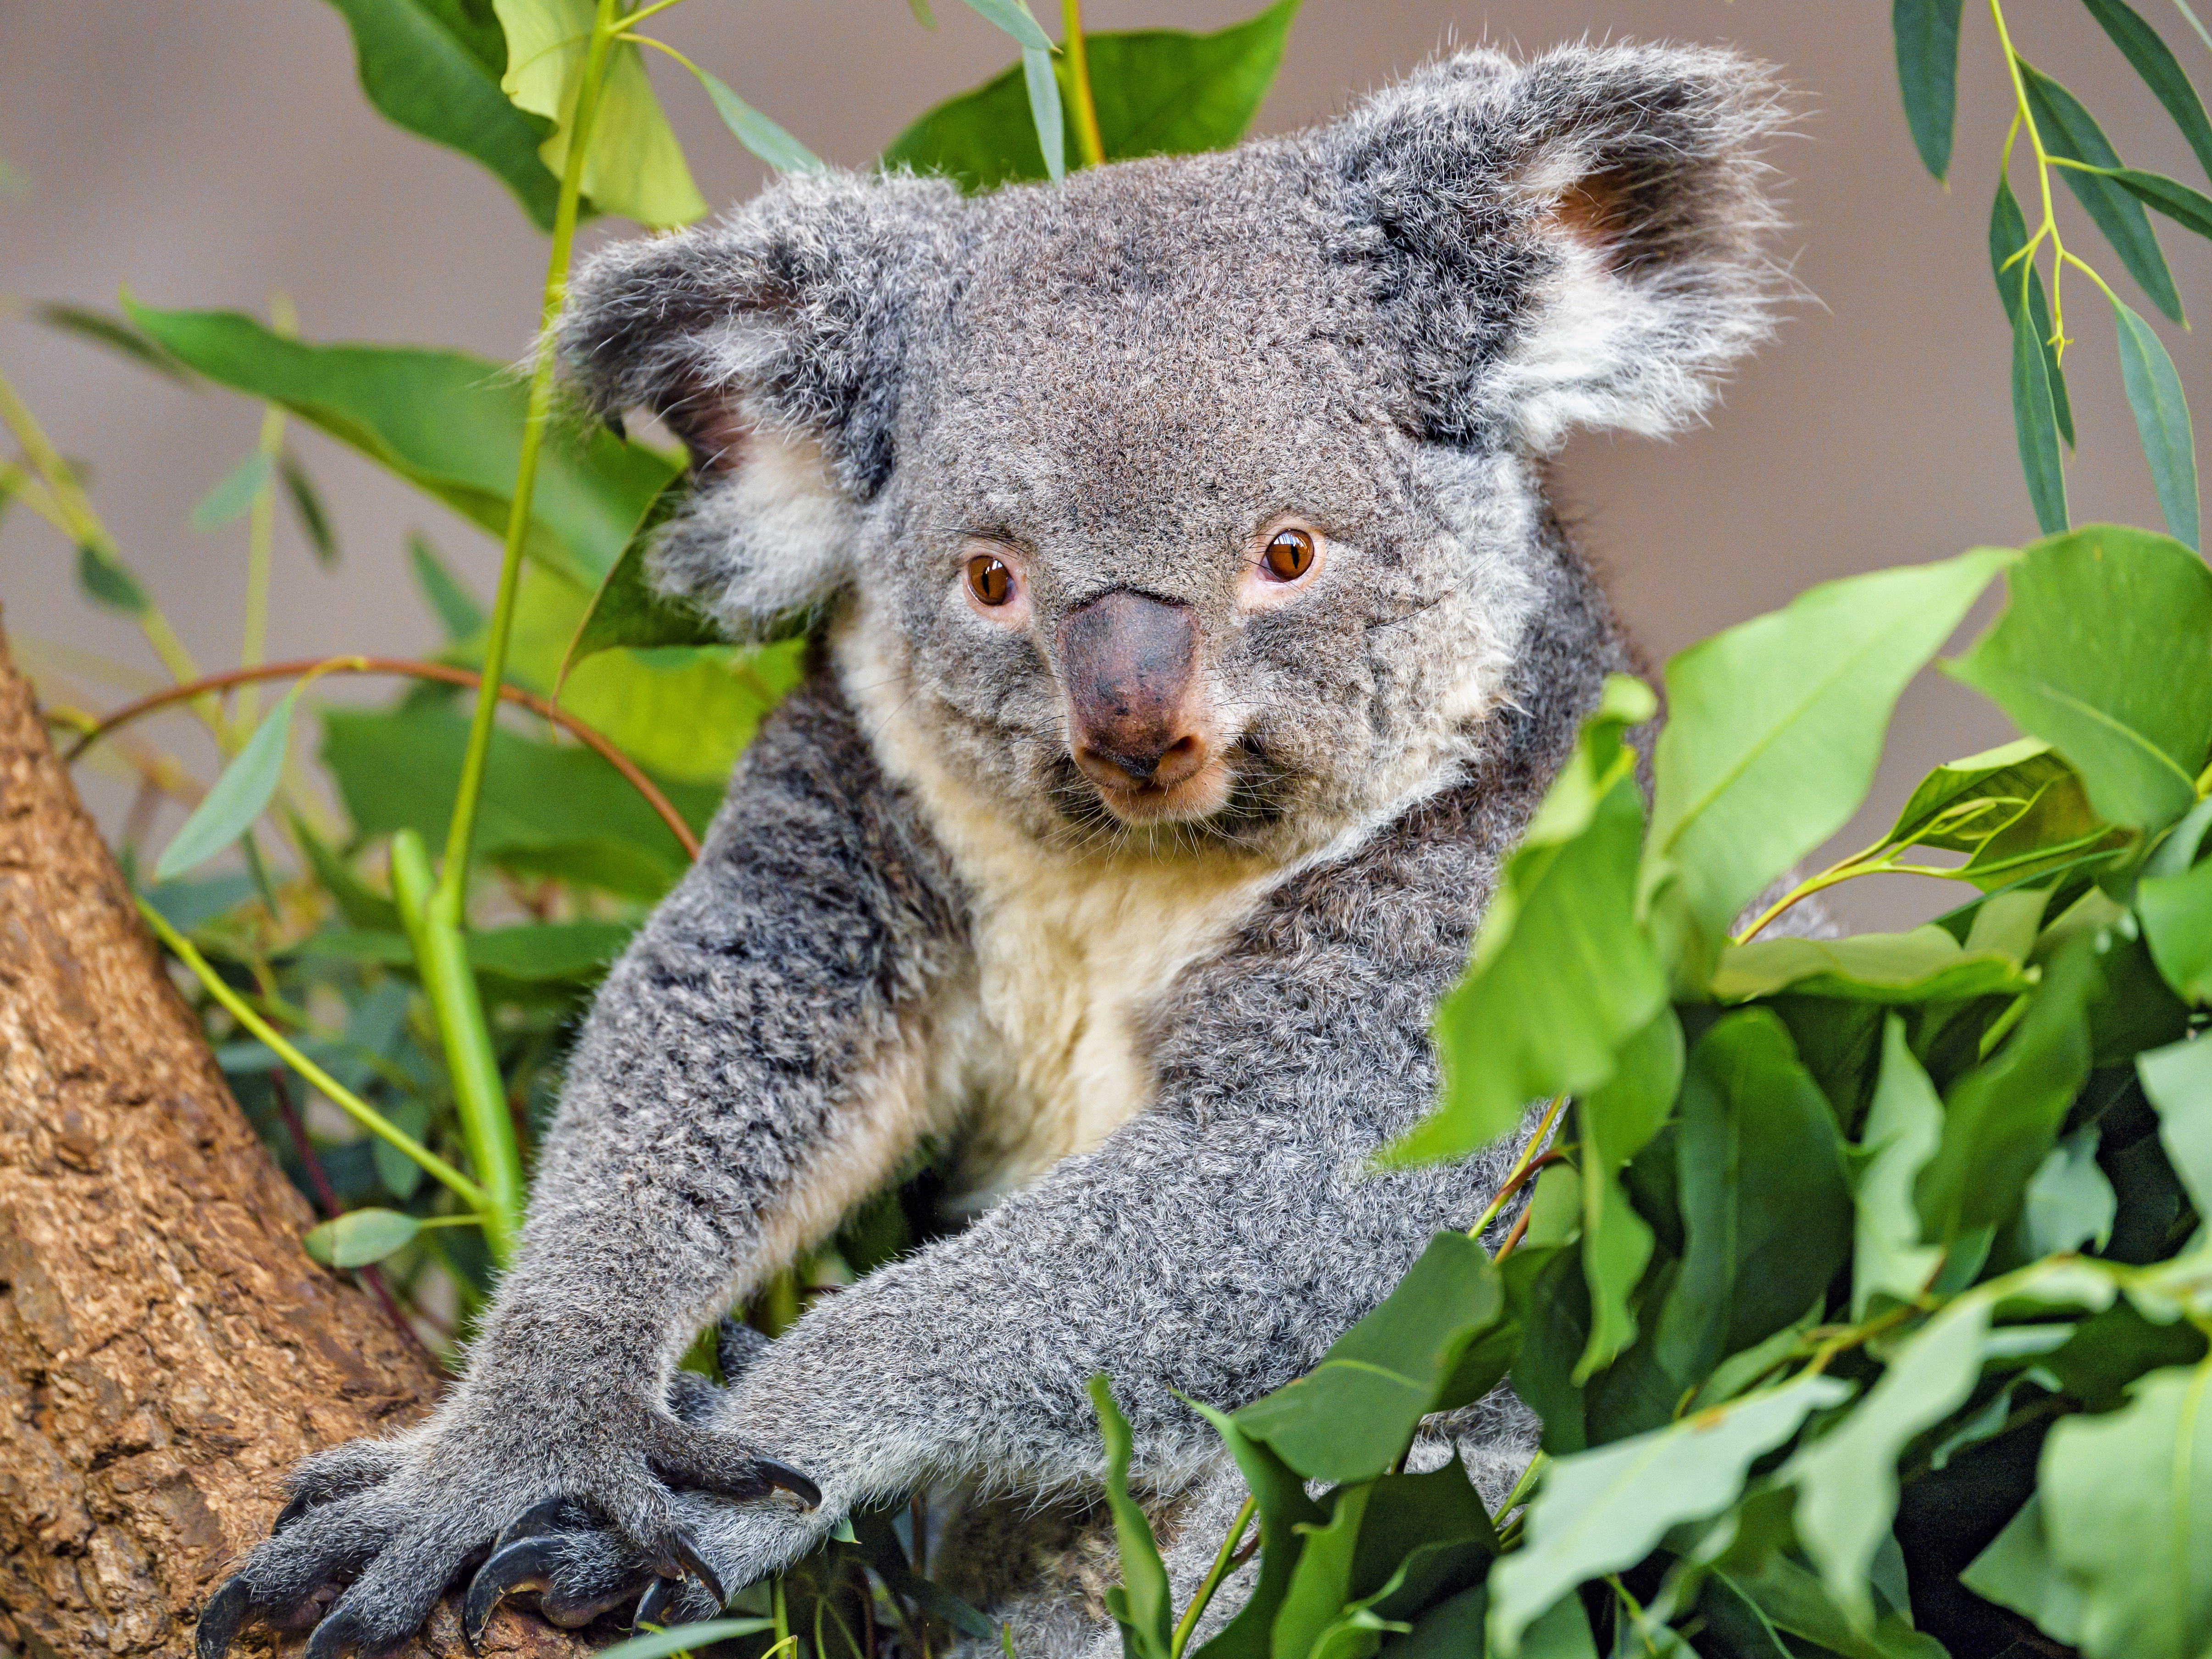 Descarga gratis la imagen Animales, Vida Silvestre, Animal, Koala, Coala, Fauna Silvestre en el escritorio de tu PC